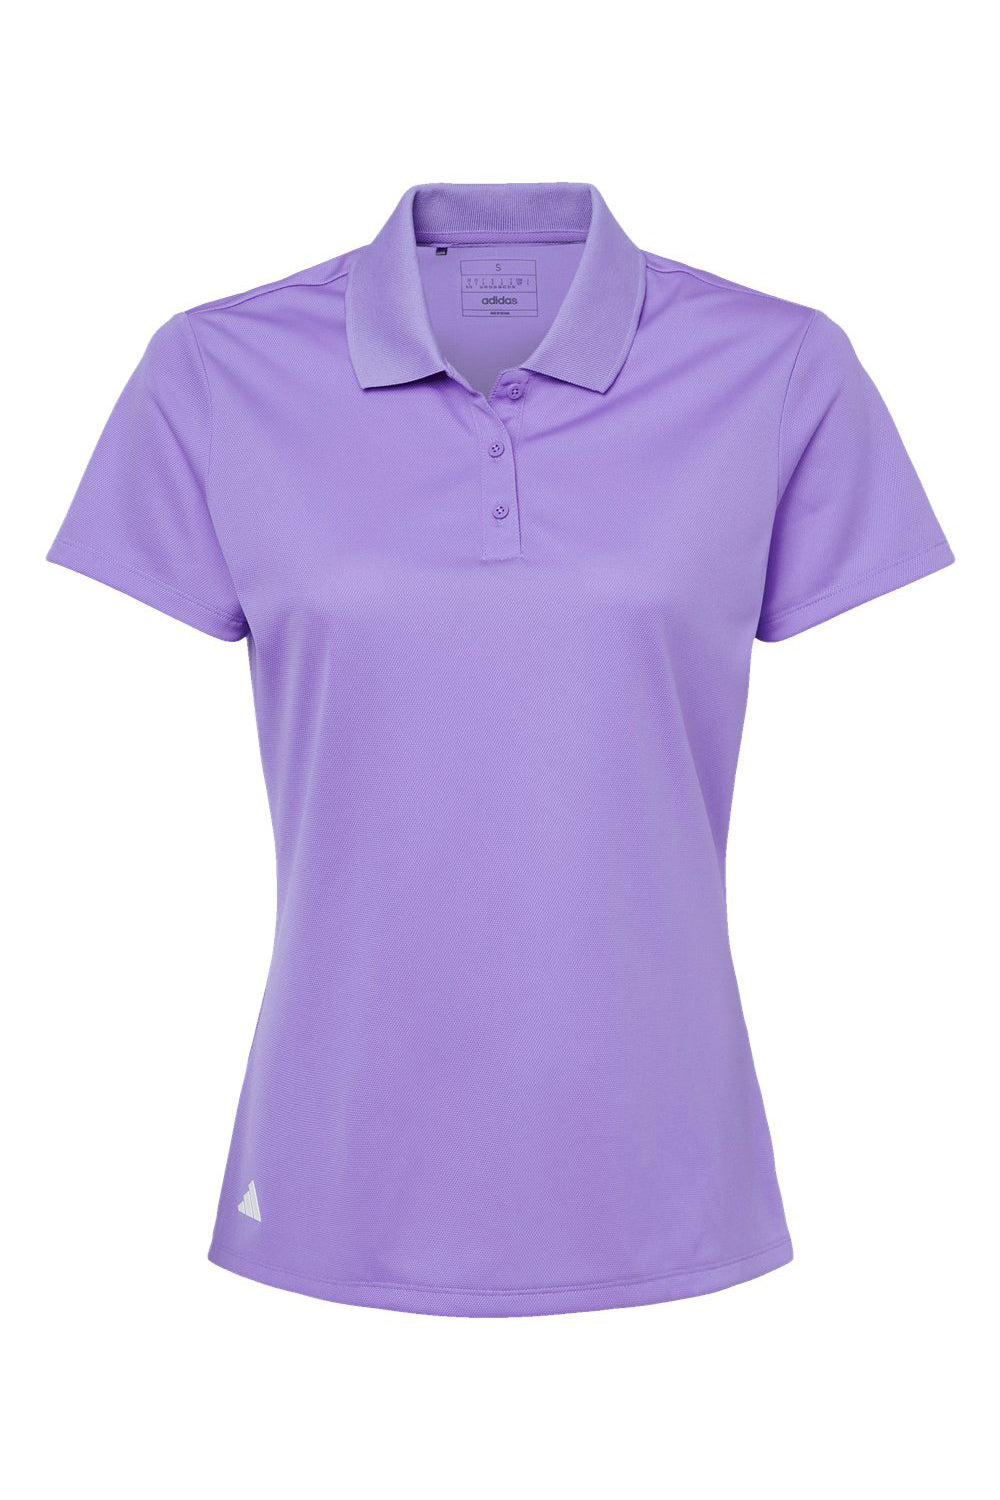 Adidas A431 Womens UV Protection Short Sleeve Polo Shirt Light Flash Purple Flat Front